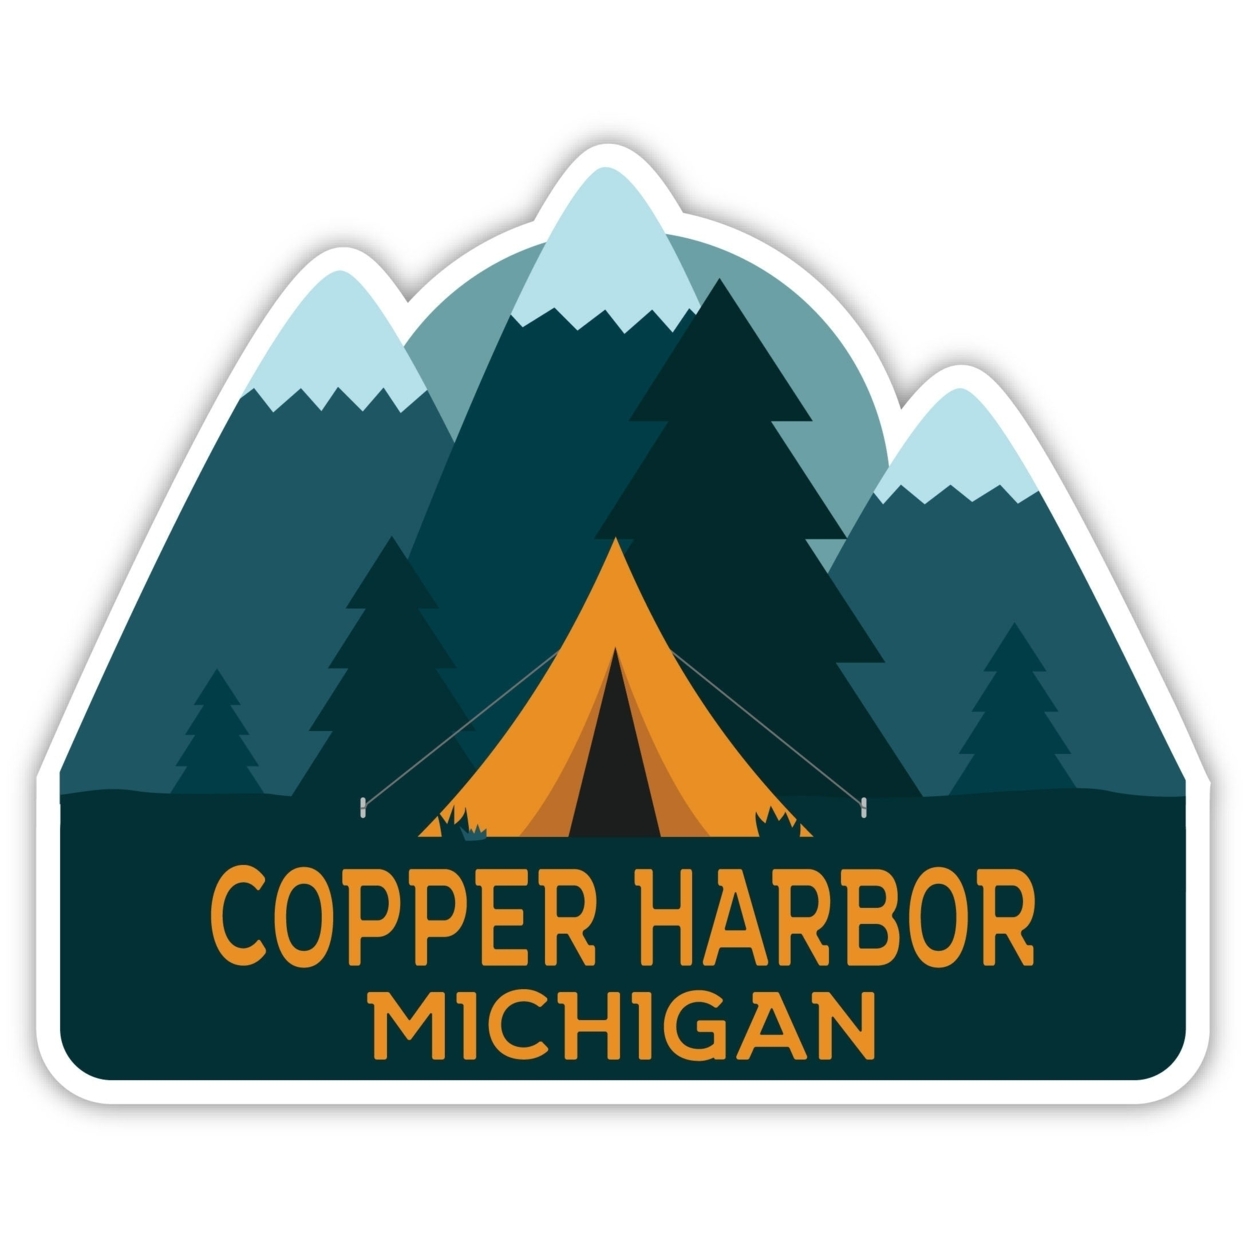 Copper Harbor Michigan Souvenir Decorative Stickers (Choose Theme And Size) - Single Unit, 6-Inch, Adventures Awaits